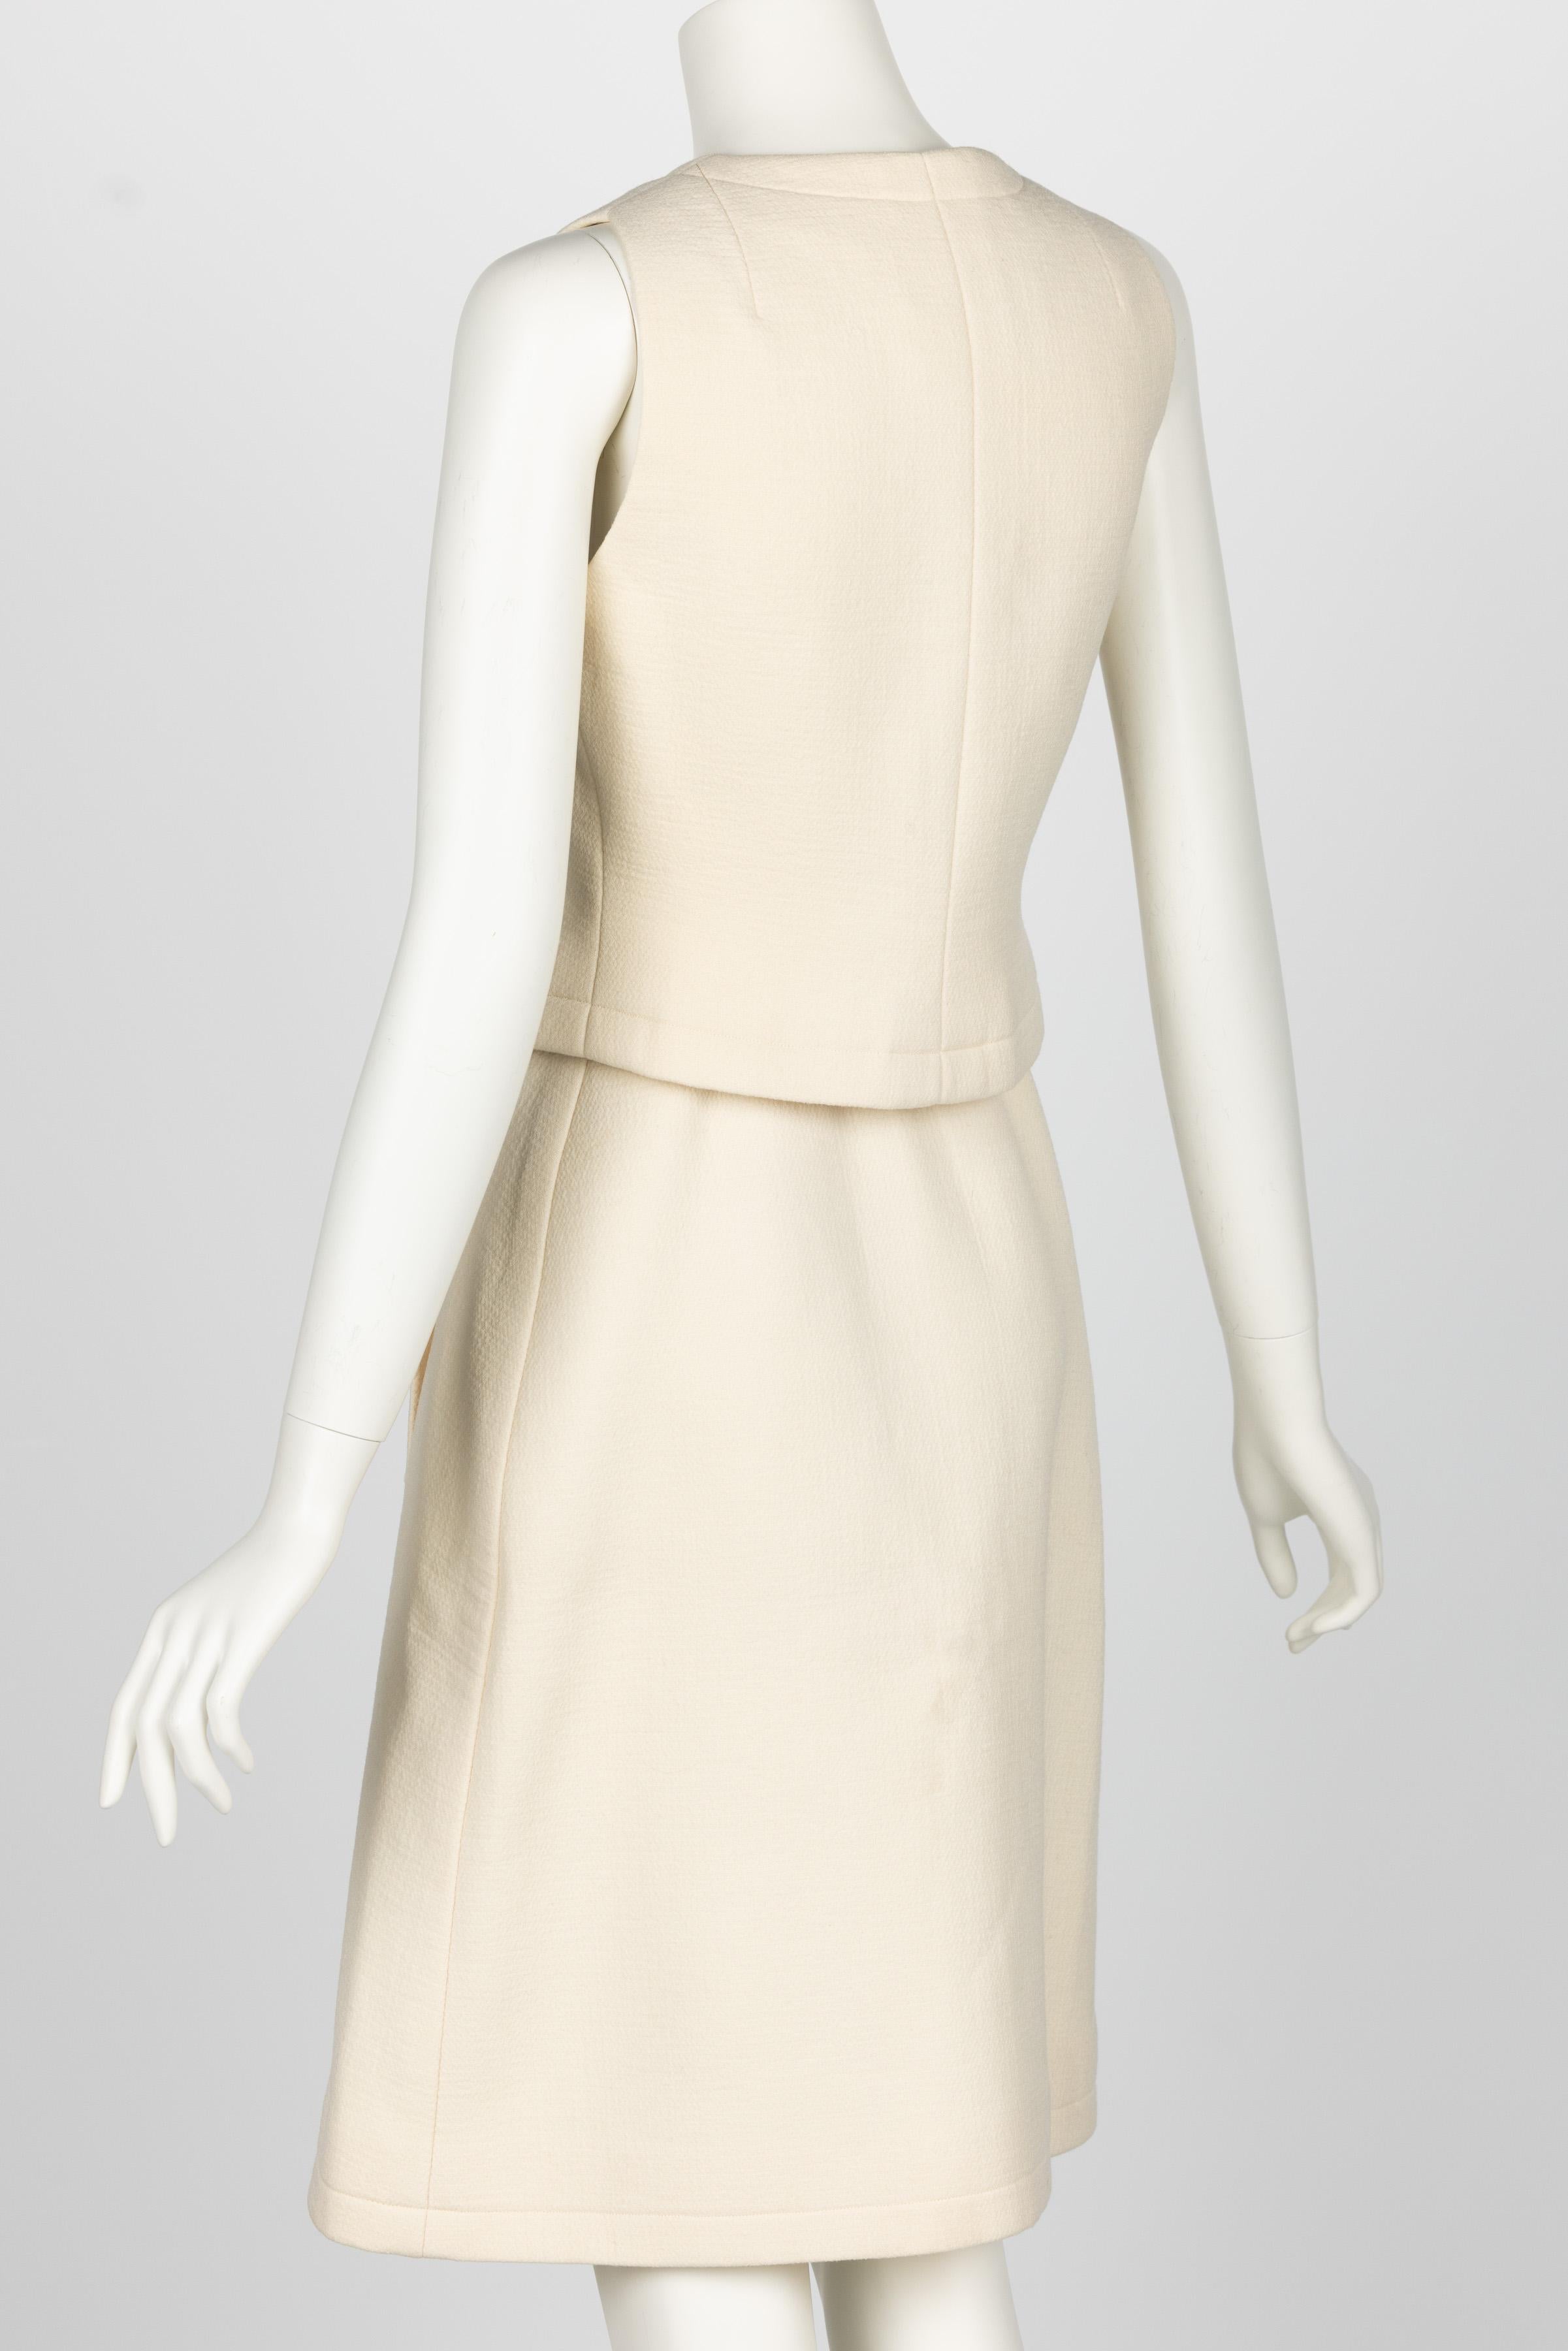 1960s Pauline Trigere Ivory & Black Tailored Vest Skirt Suit For Sale 1